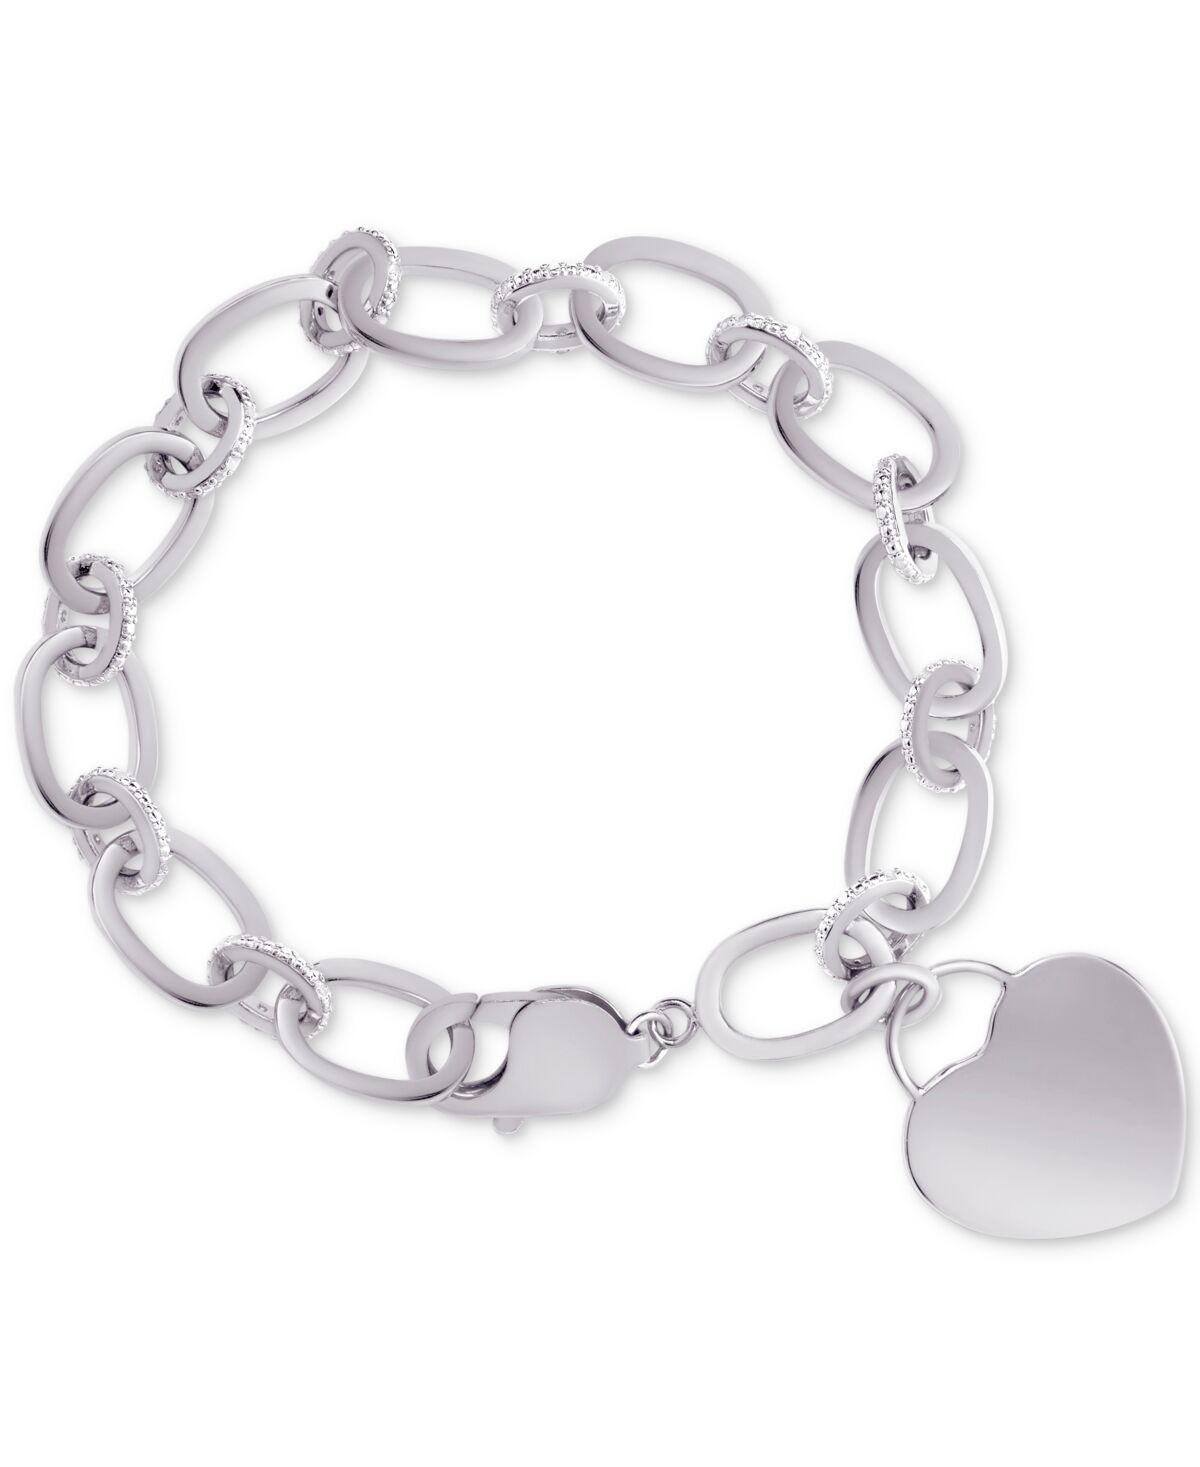 Macy's Diamond Heart Charm Bracelet (1/10 ct. t.w.) in Sterling Silver or 14k Gold-Plated Sterling Silver - Sterling Silver